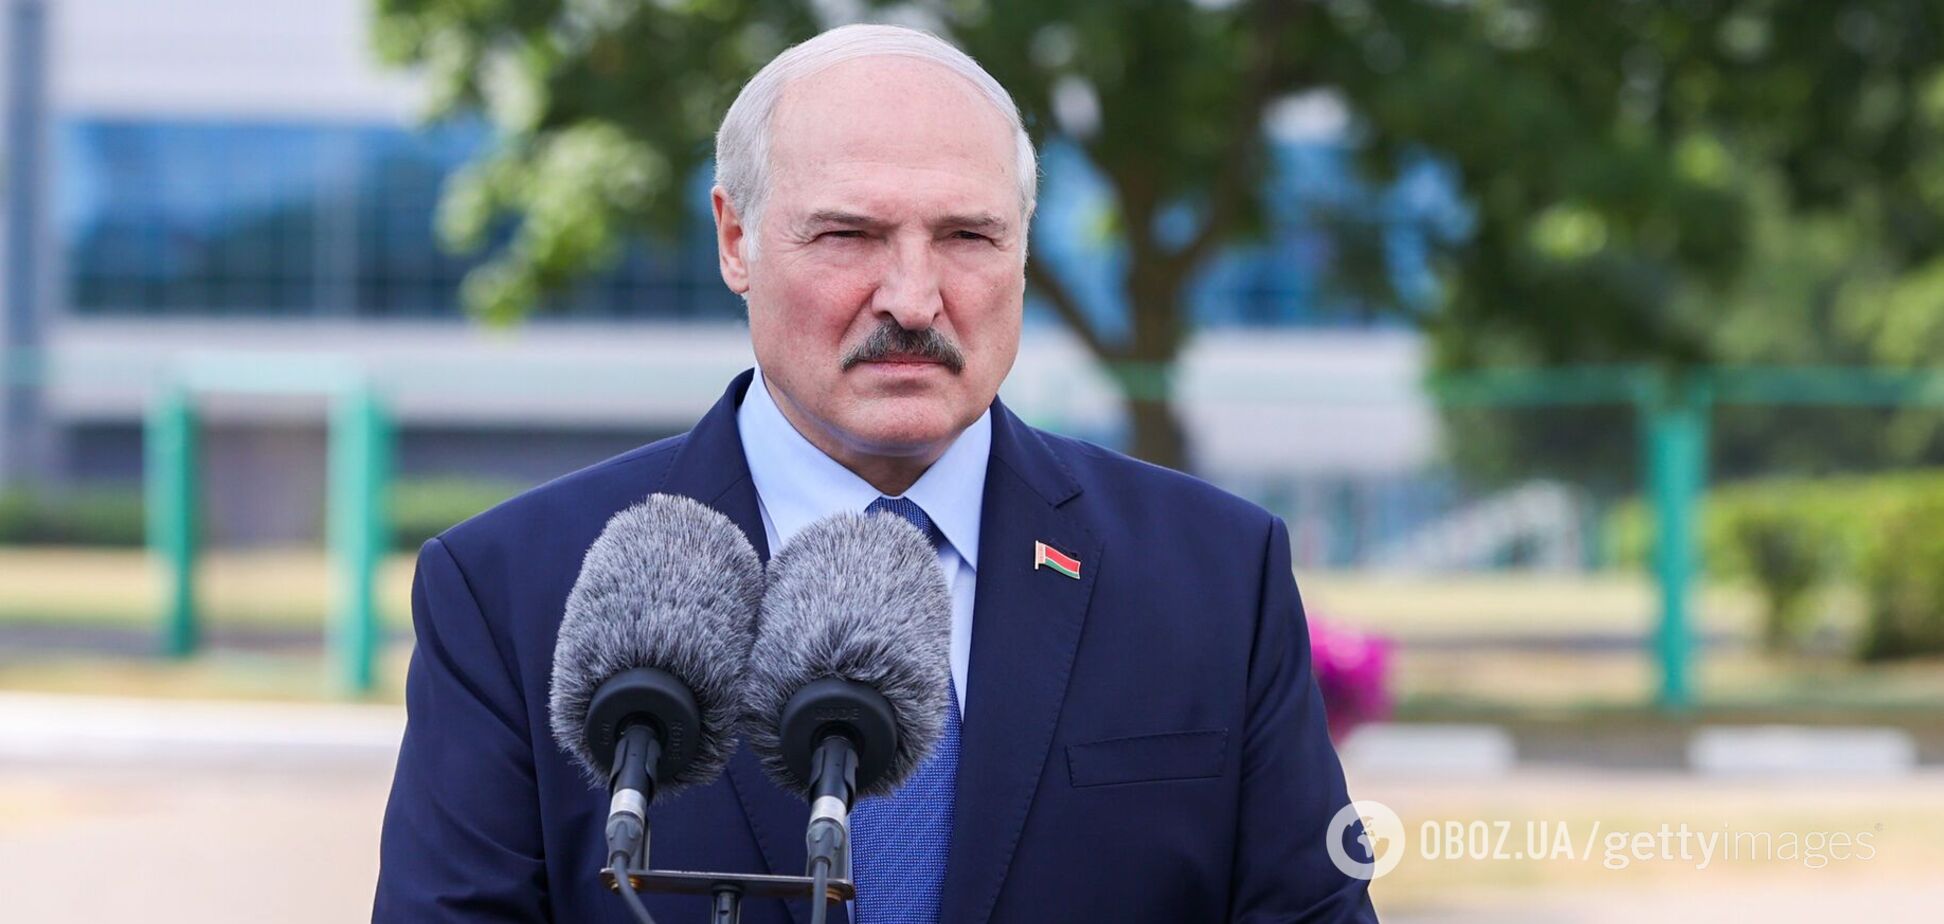 Александр Лукашенко обозвал протестующих овцами